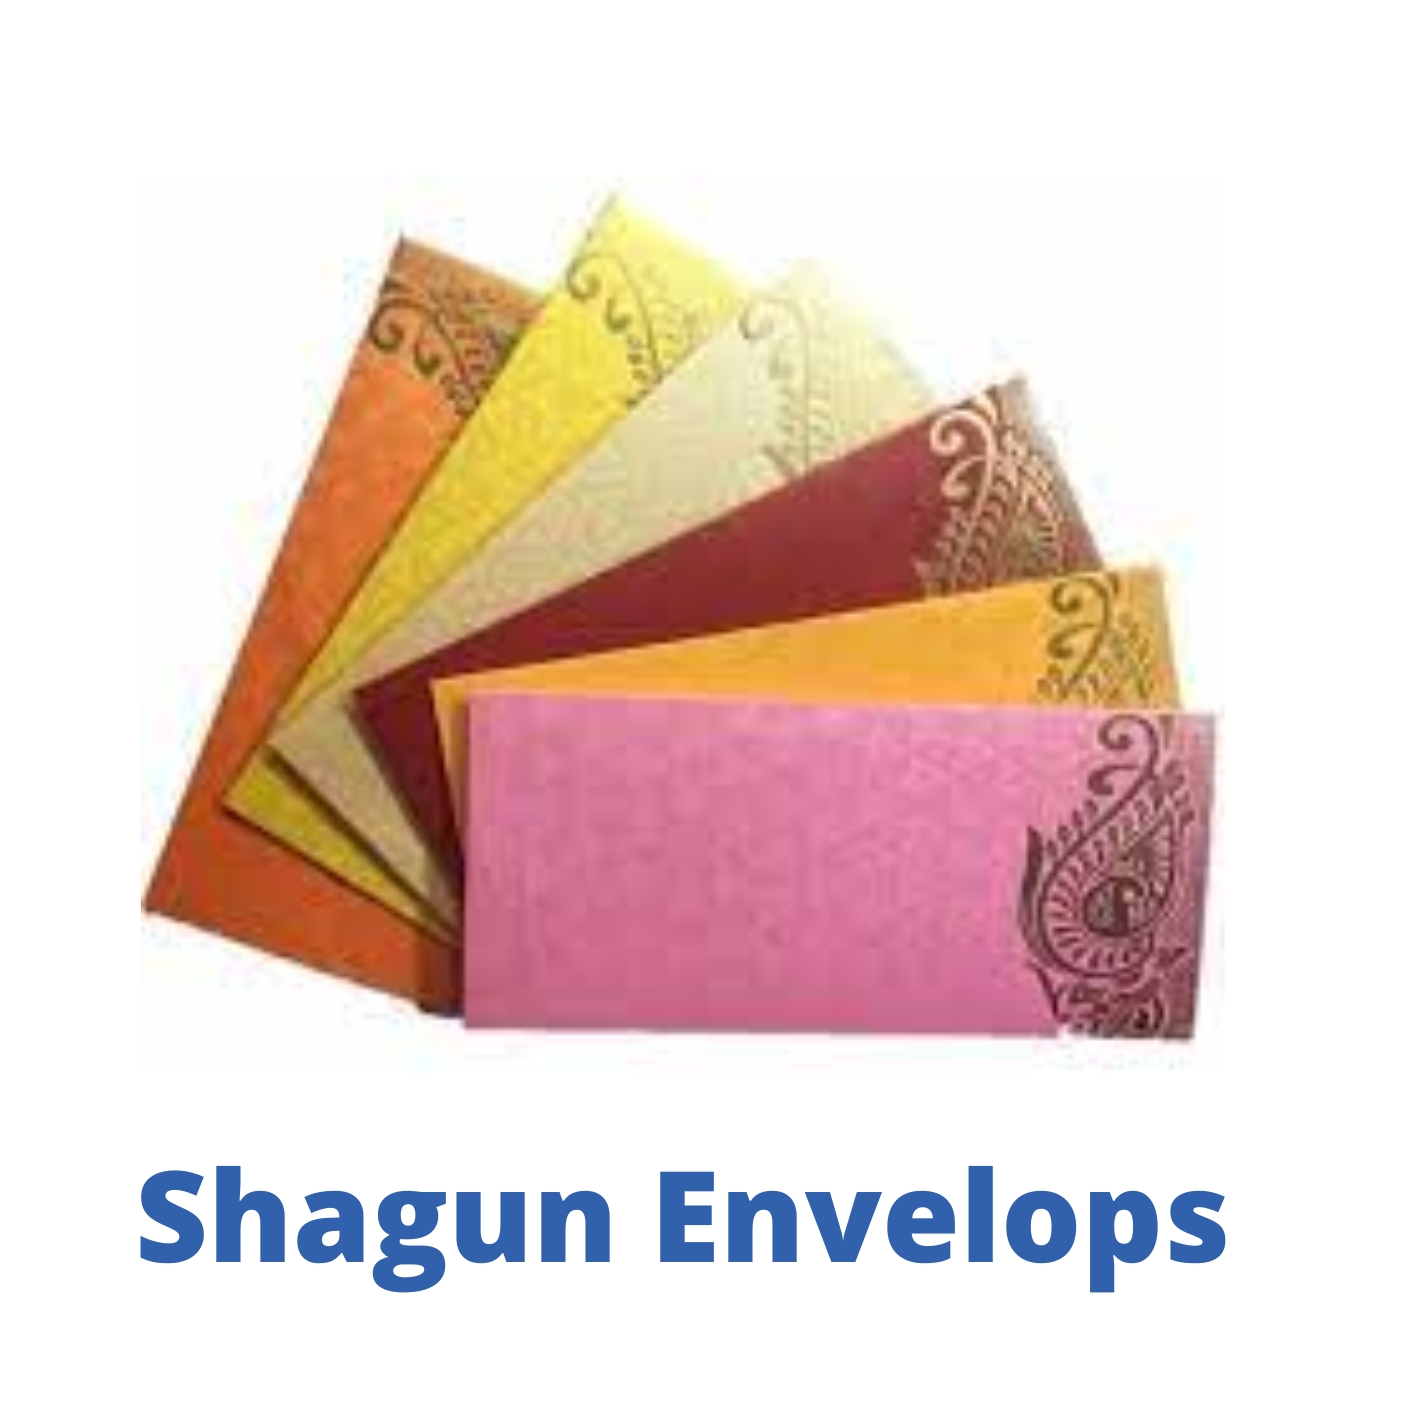 Shagun Envelops